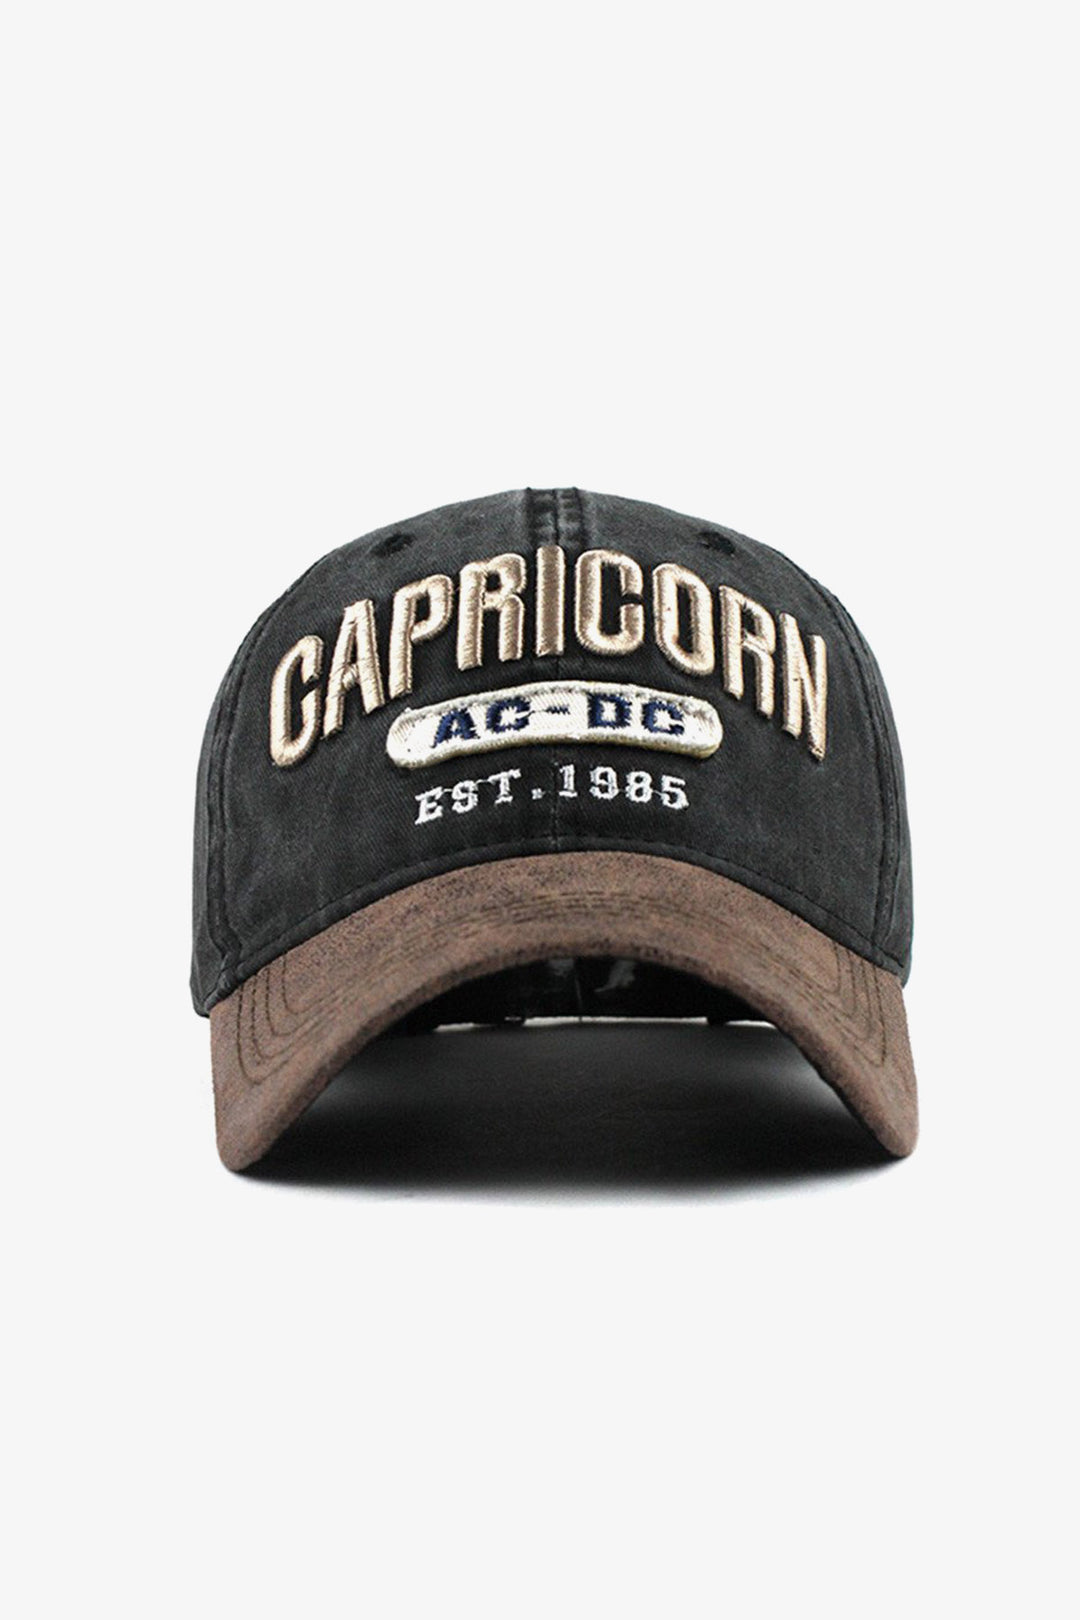 Capricorn Retro Grey Cap - A23 - MCP073R